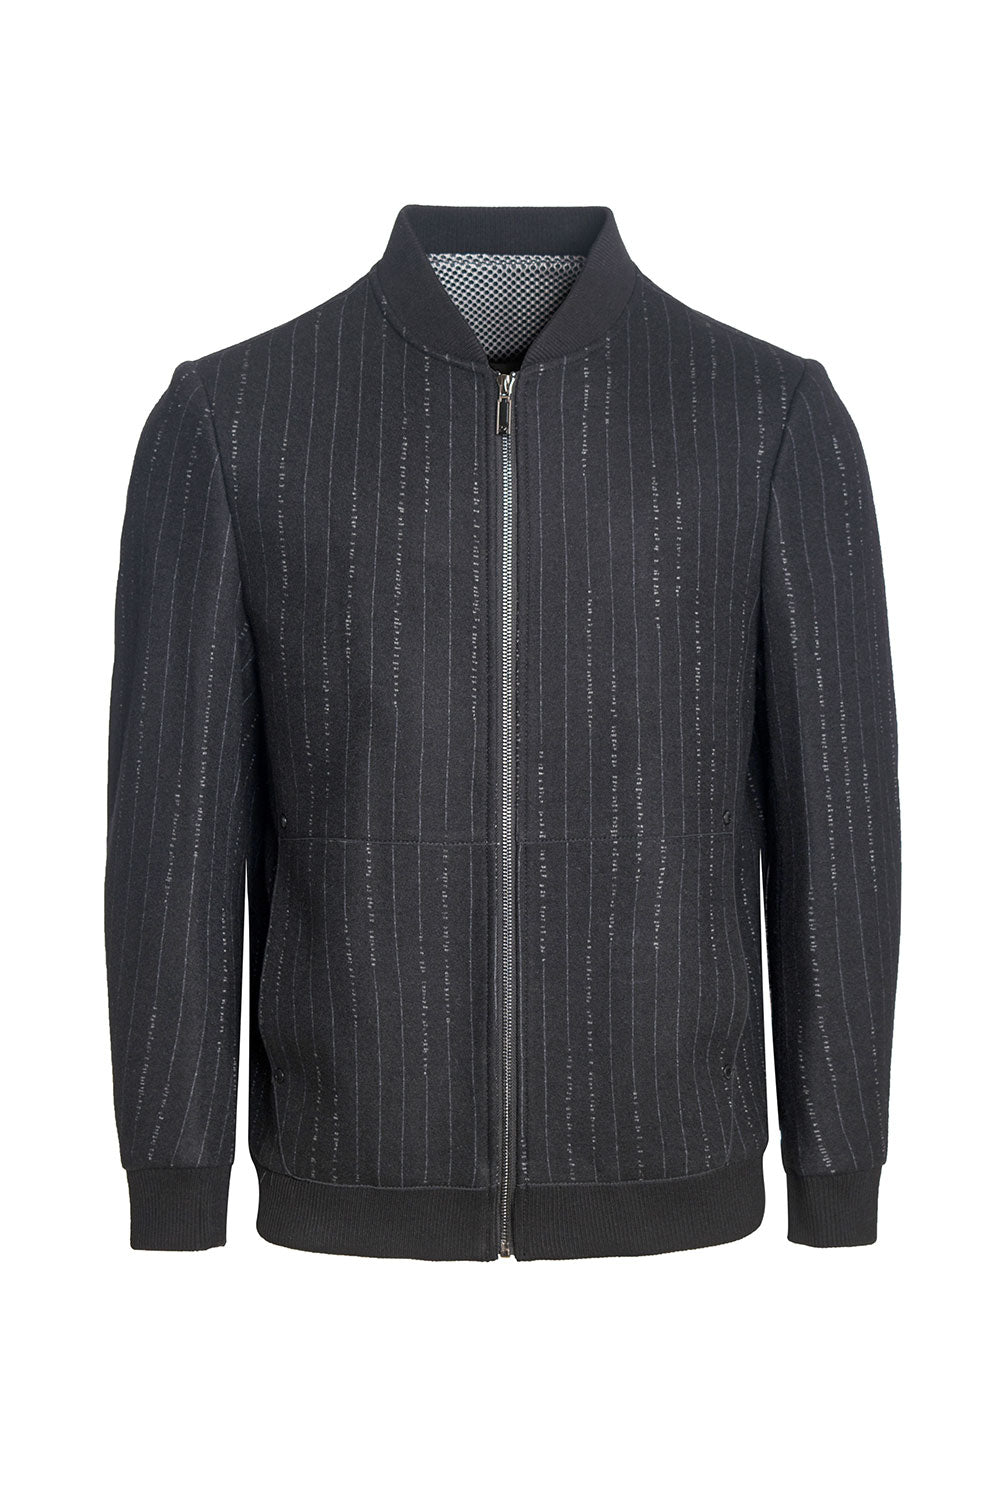 Barabas Men Coat Black grey knit collar striped liner jacket BH60 | eBay